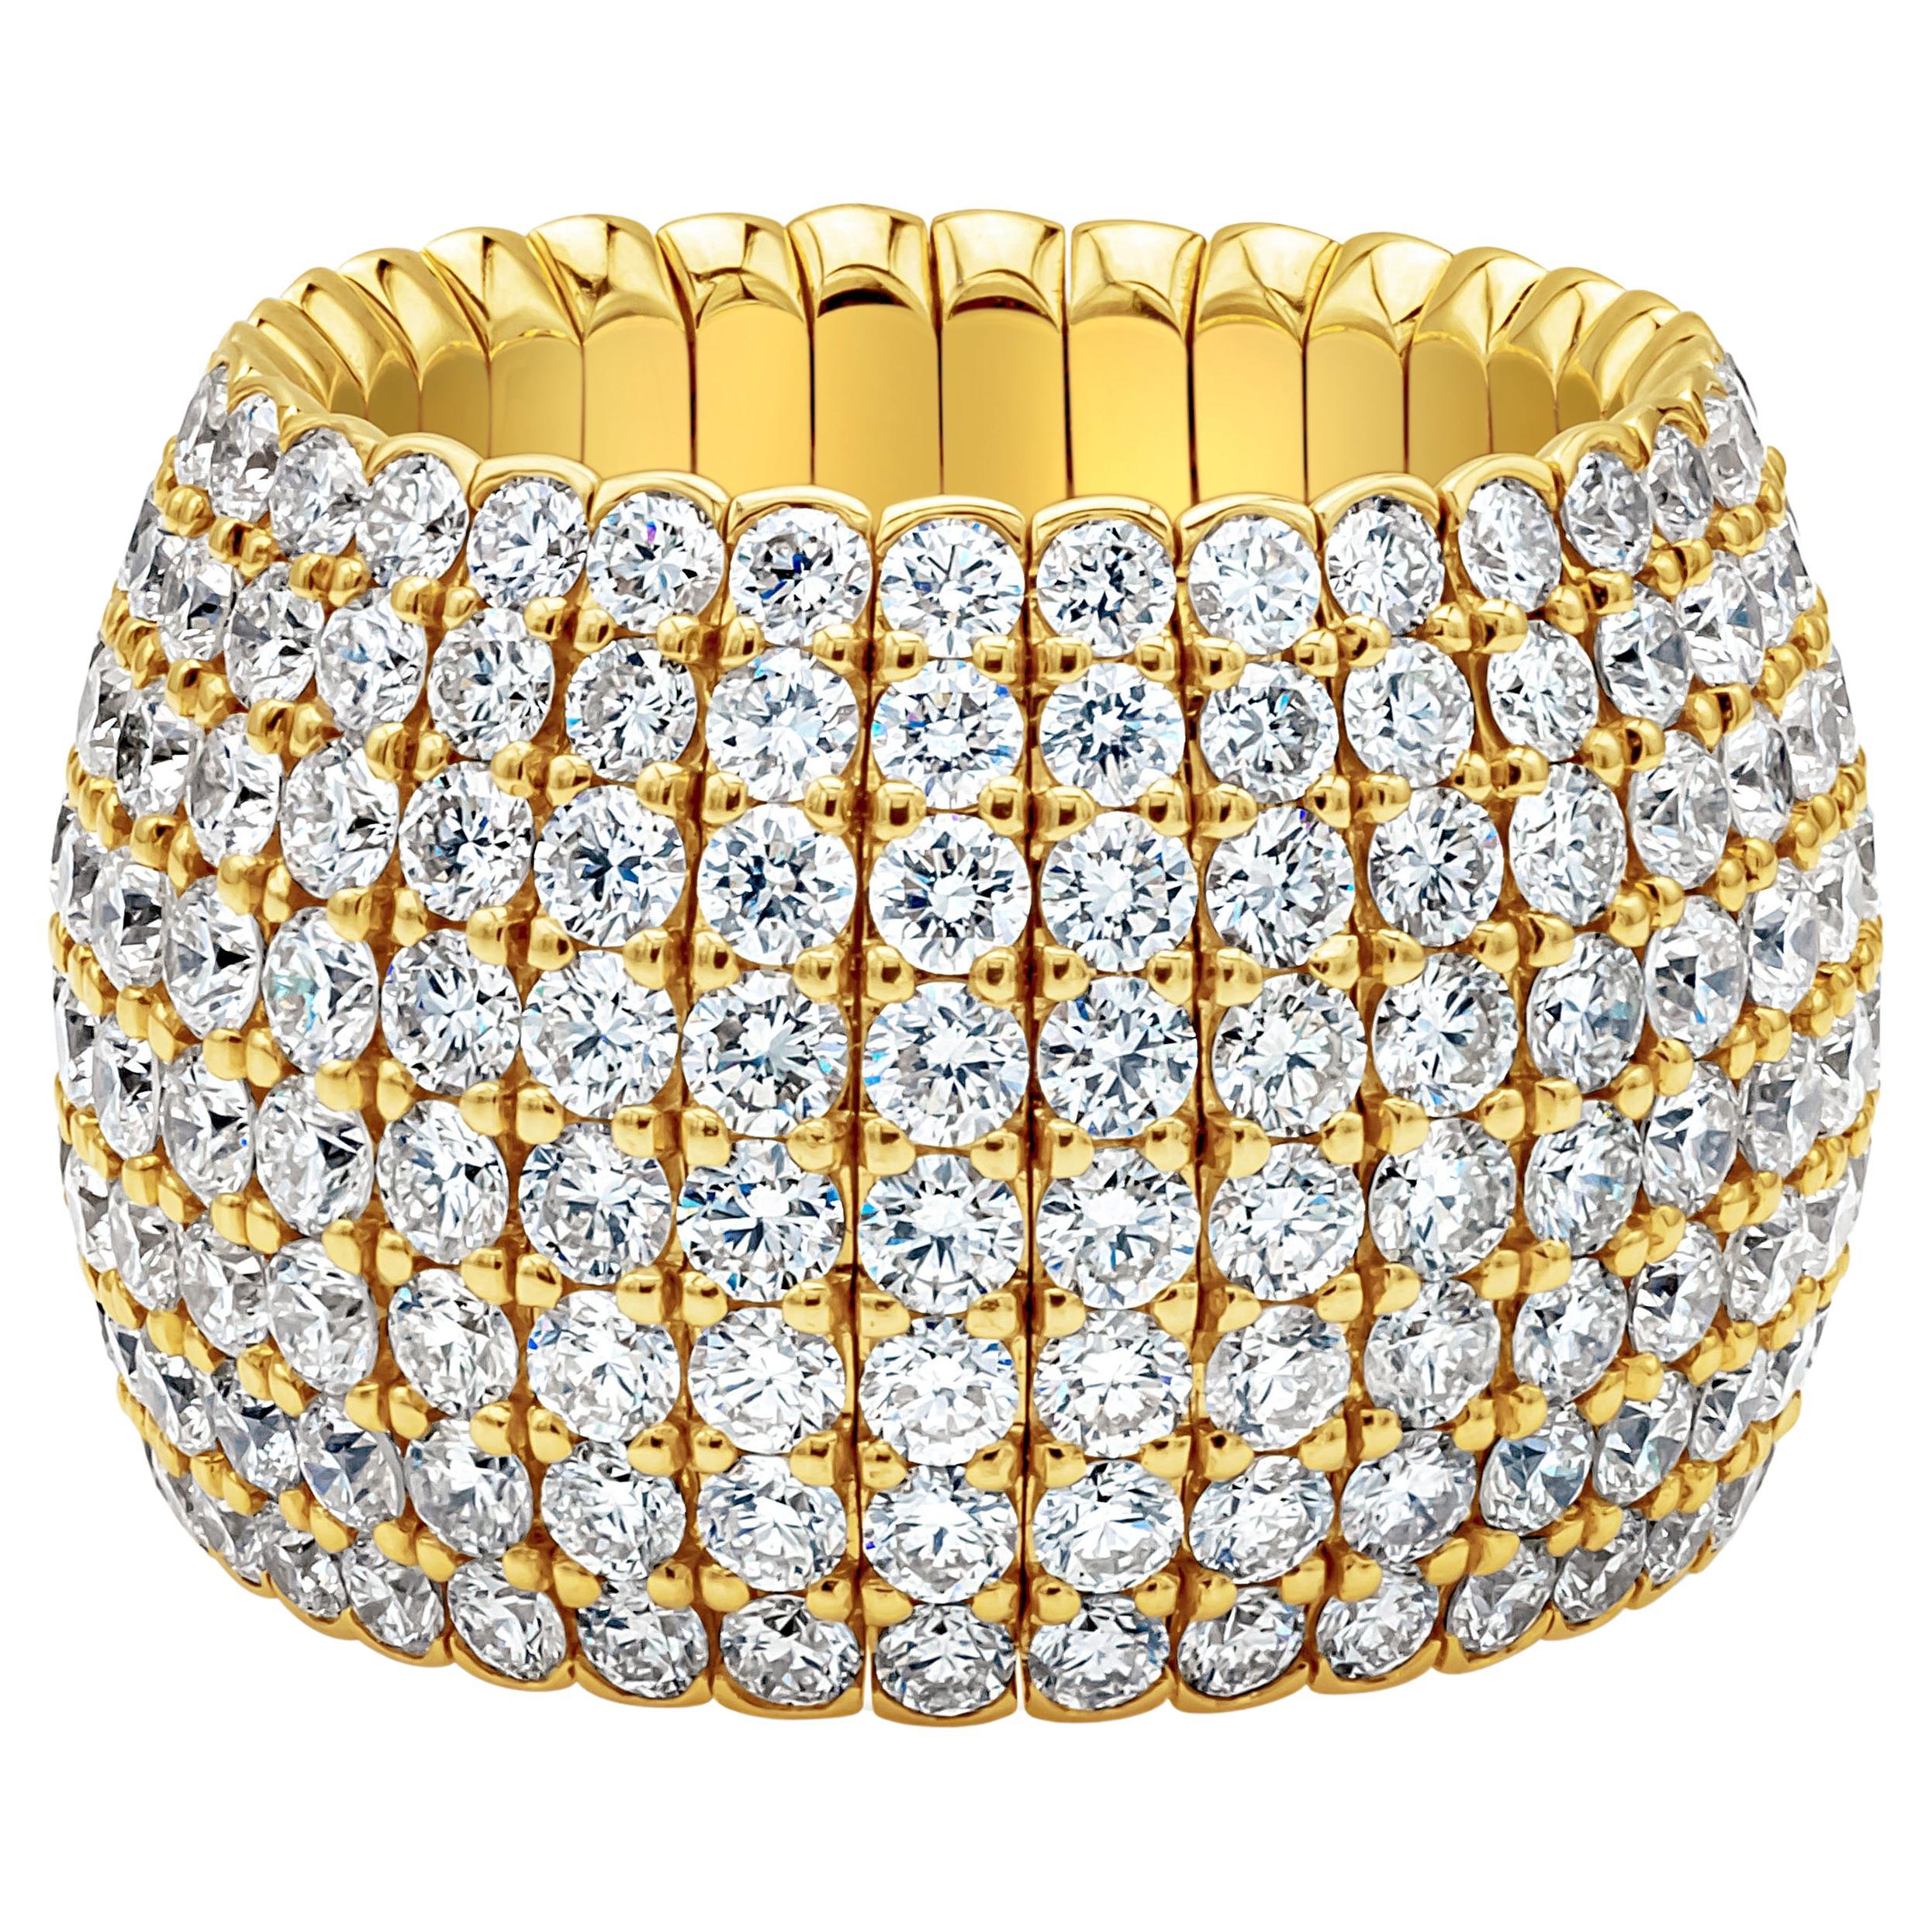 Roman Malakov 8.11 Carats Total Round Cut Diamond Flexible Pave Fashion Ring